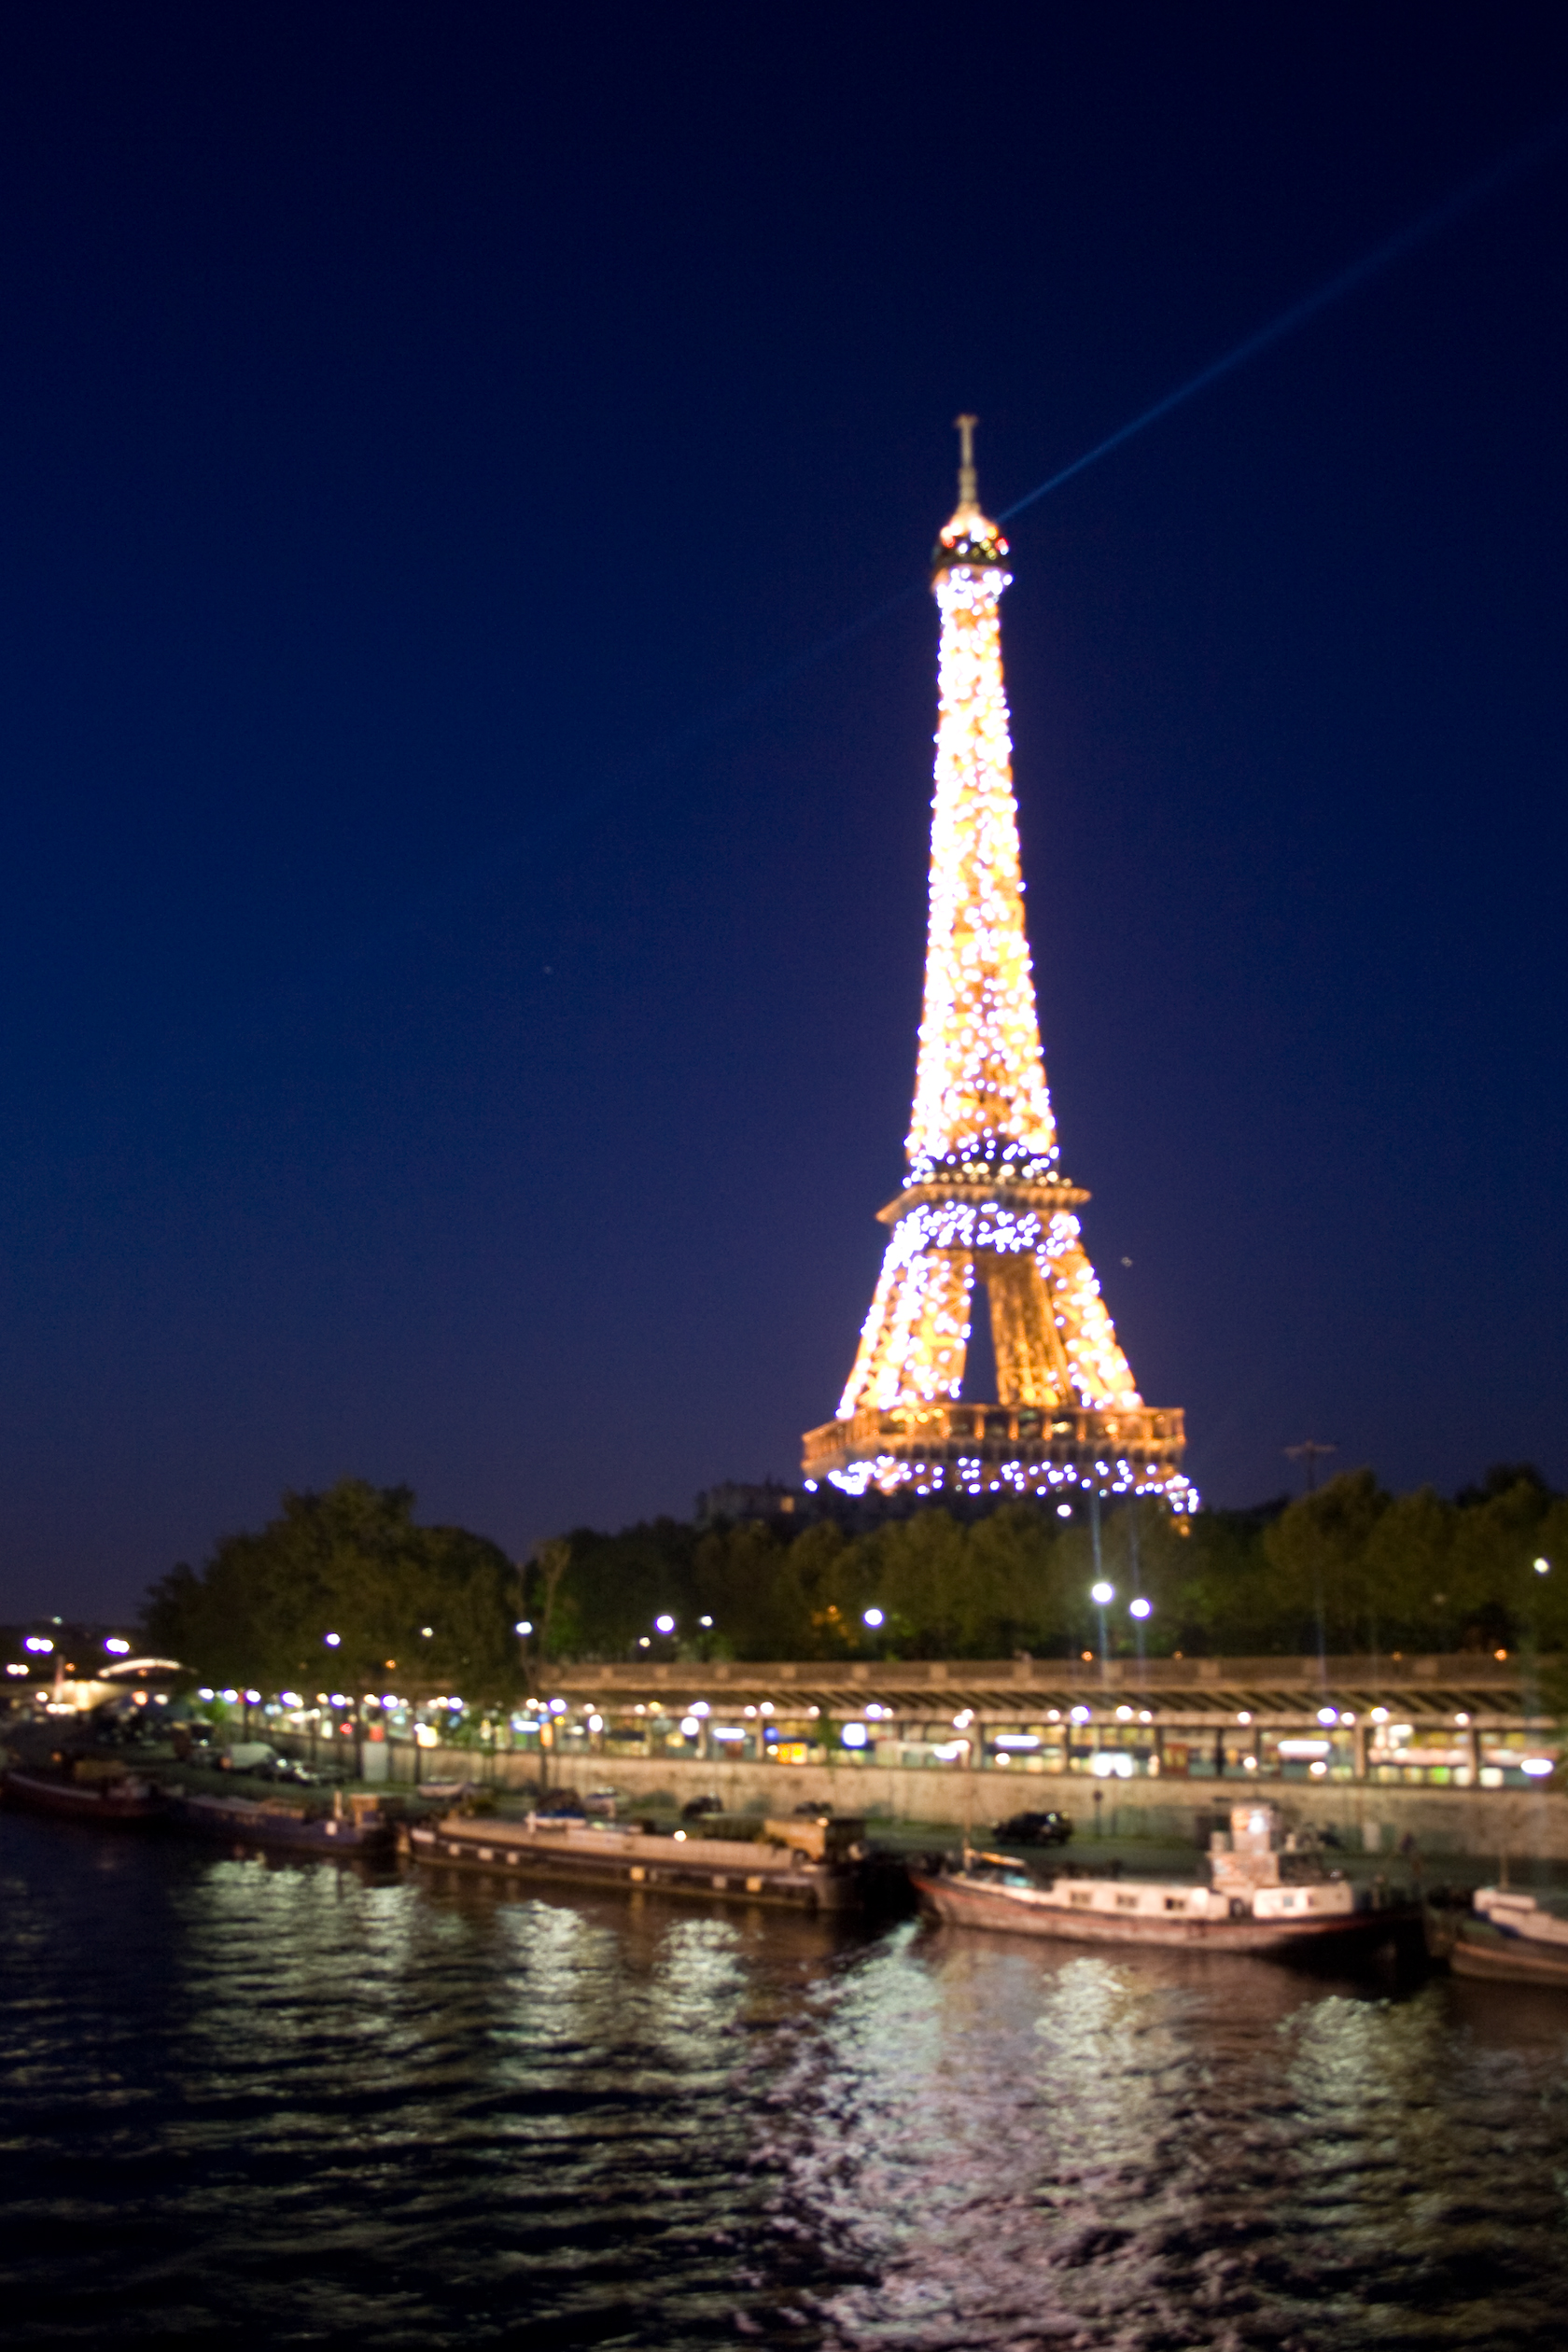 Eiffel Tower, River Seine, tour boats